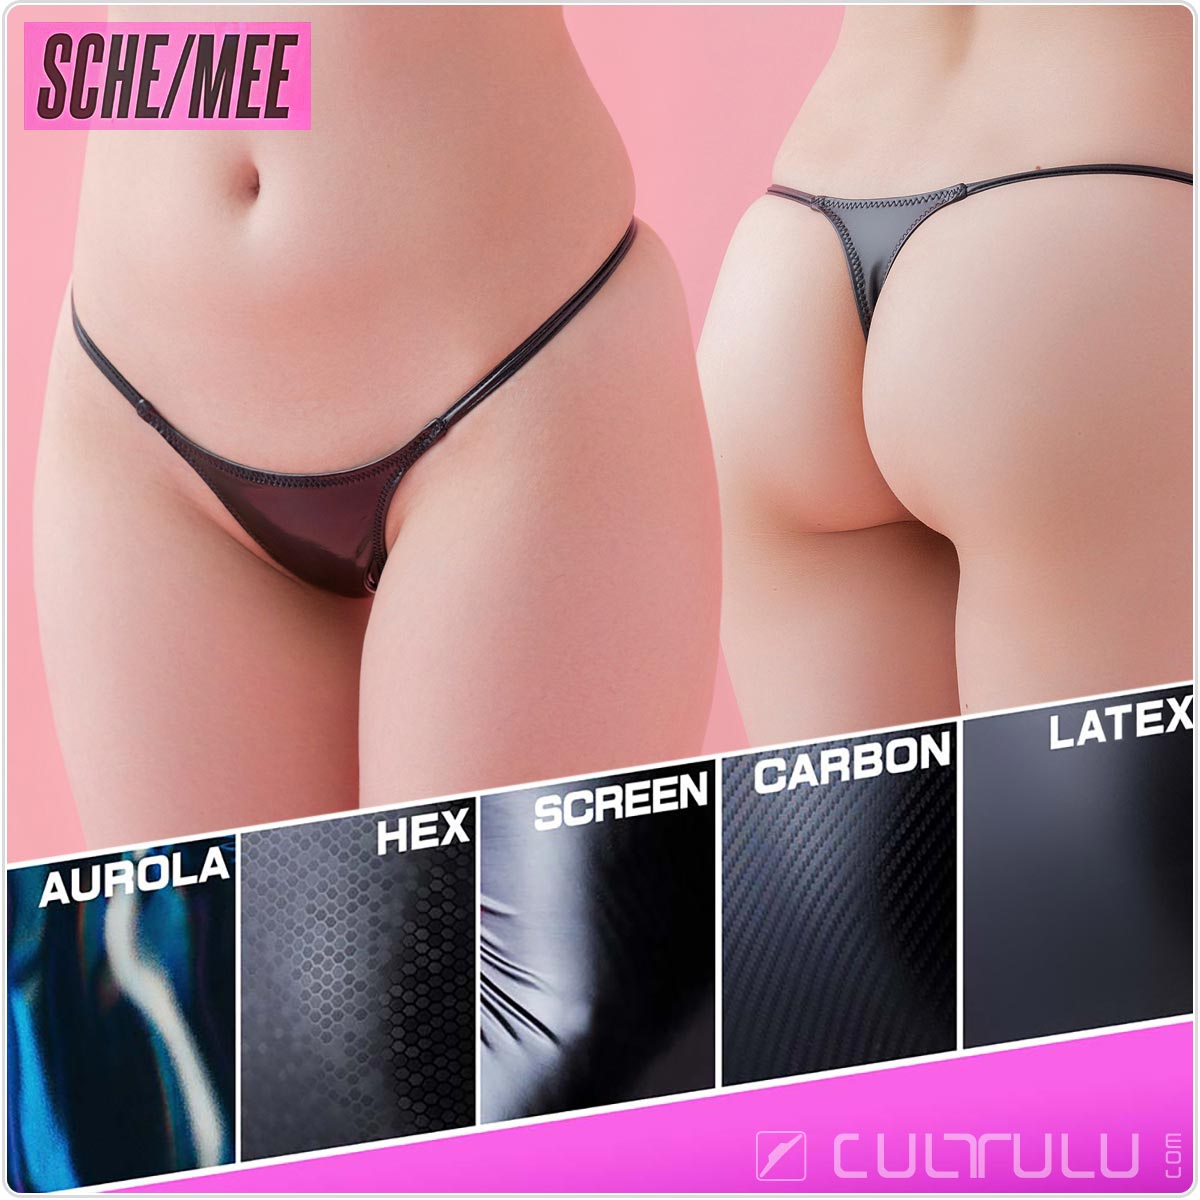 Sche-Mee rubberized thong slip